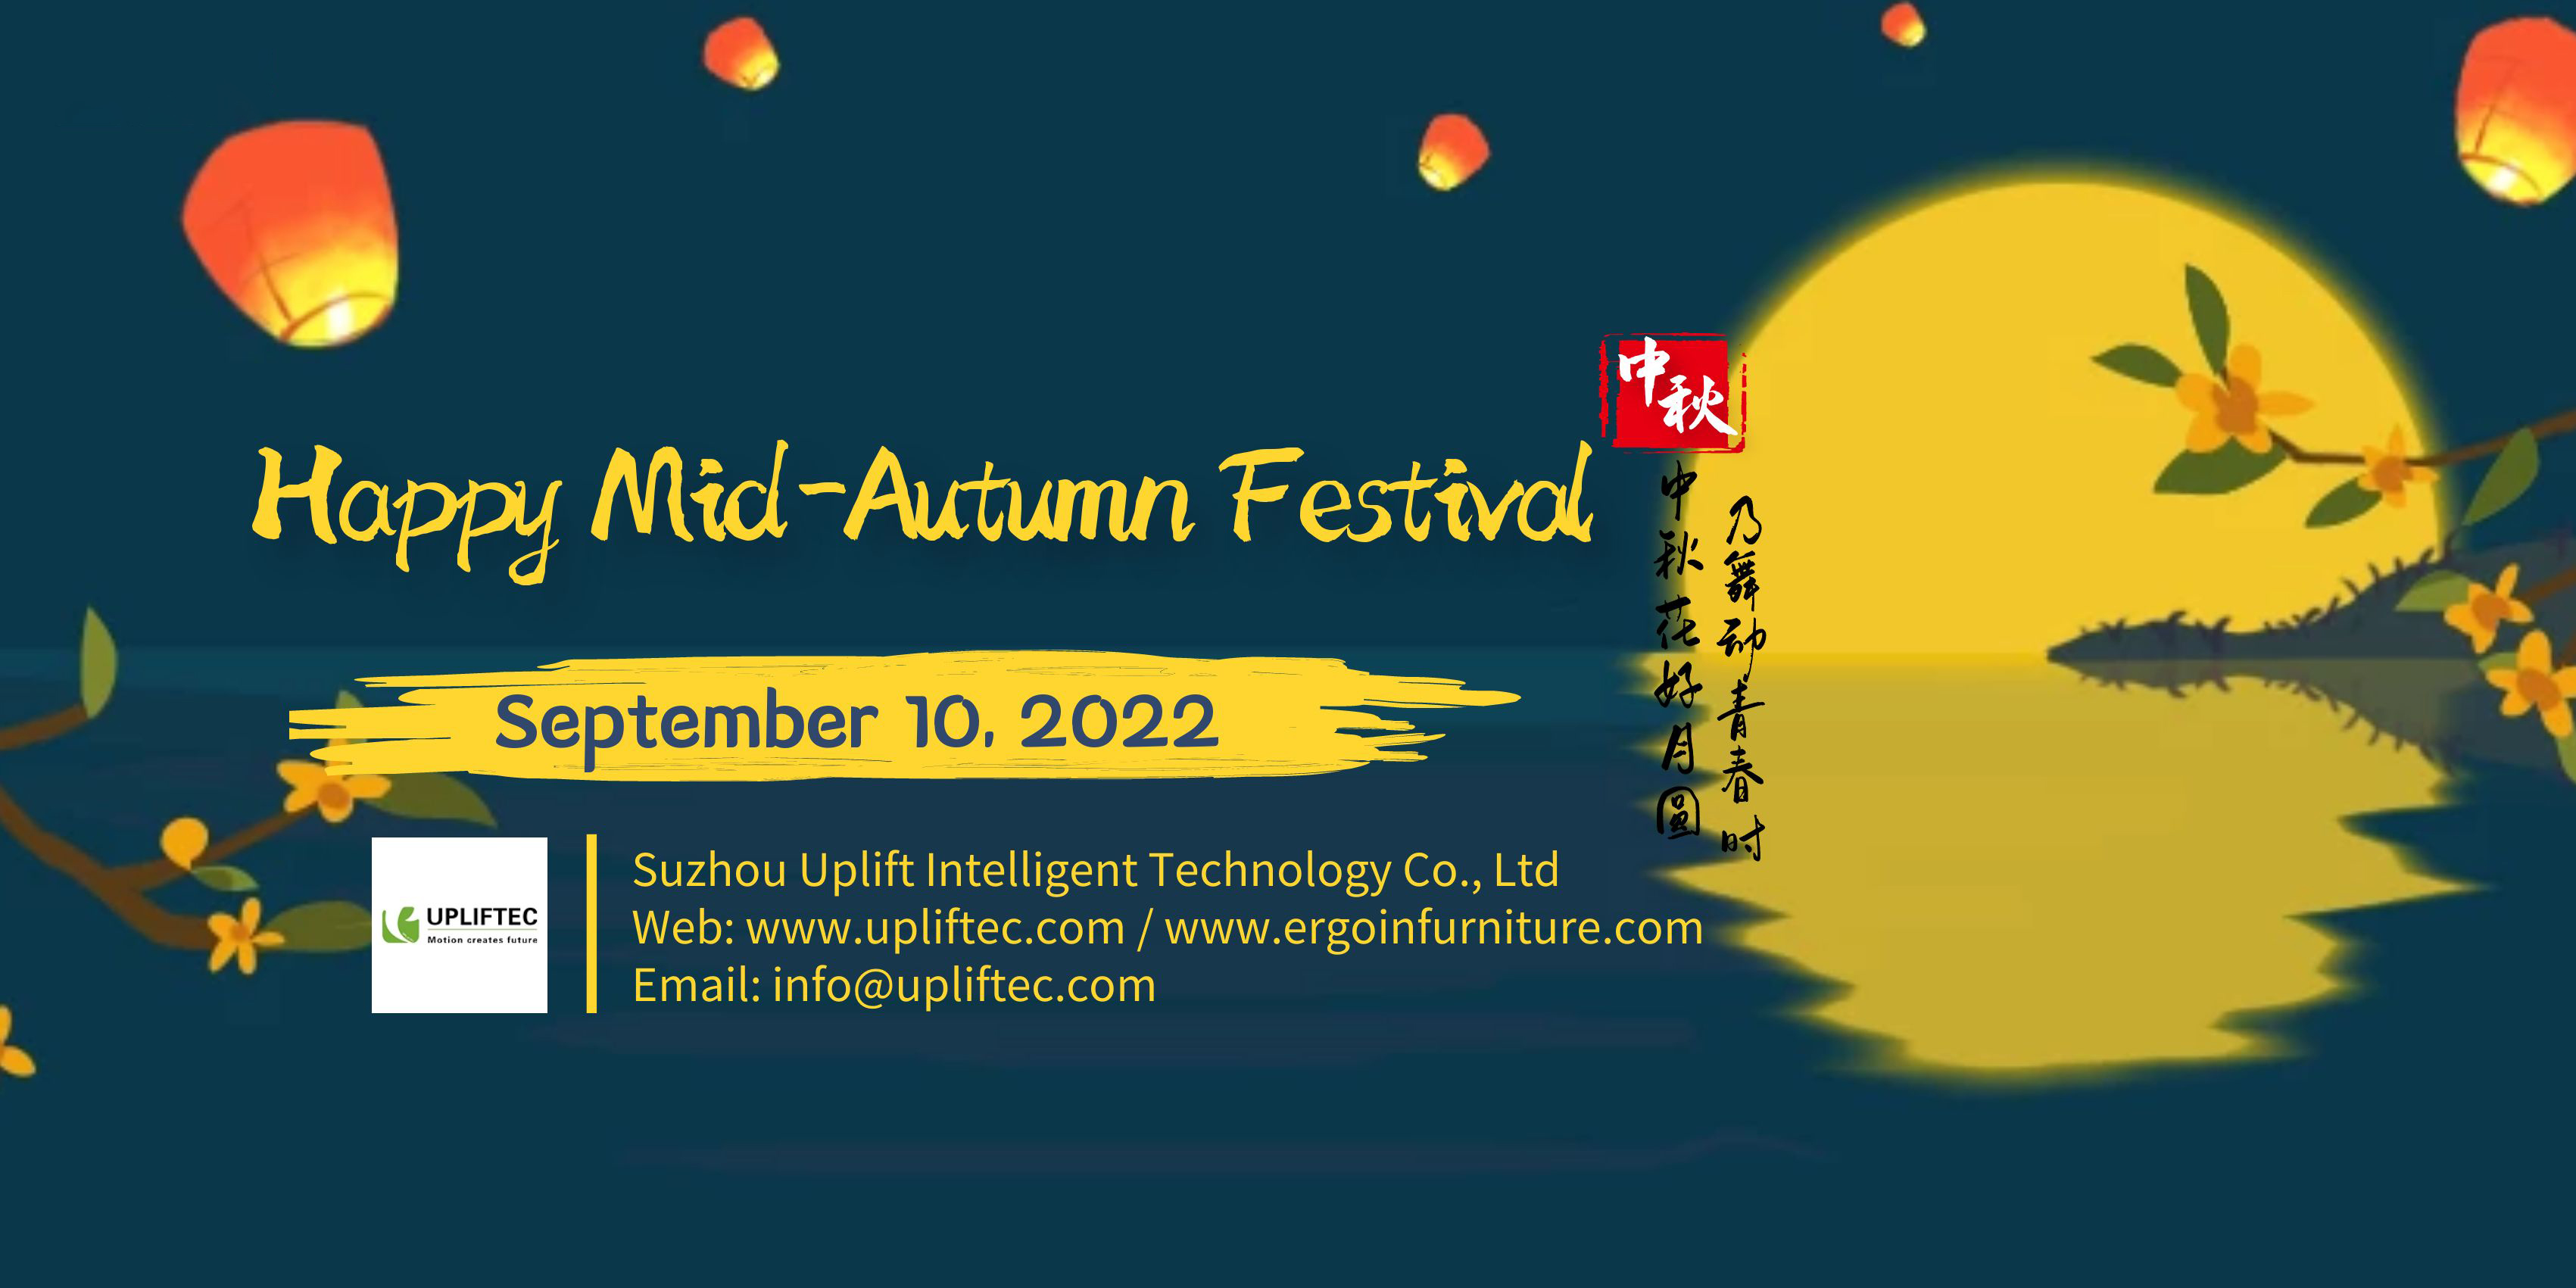 Happy Mid-Autumn Festival 2022